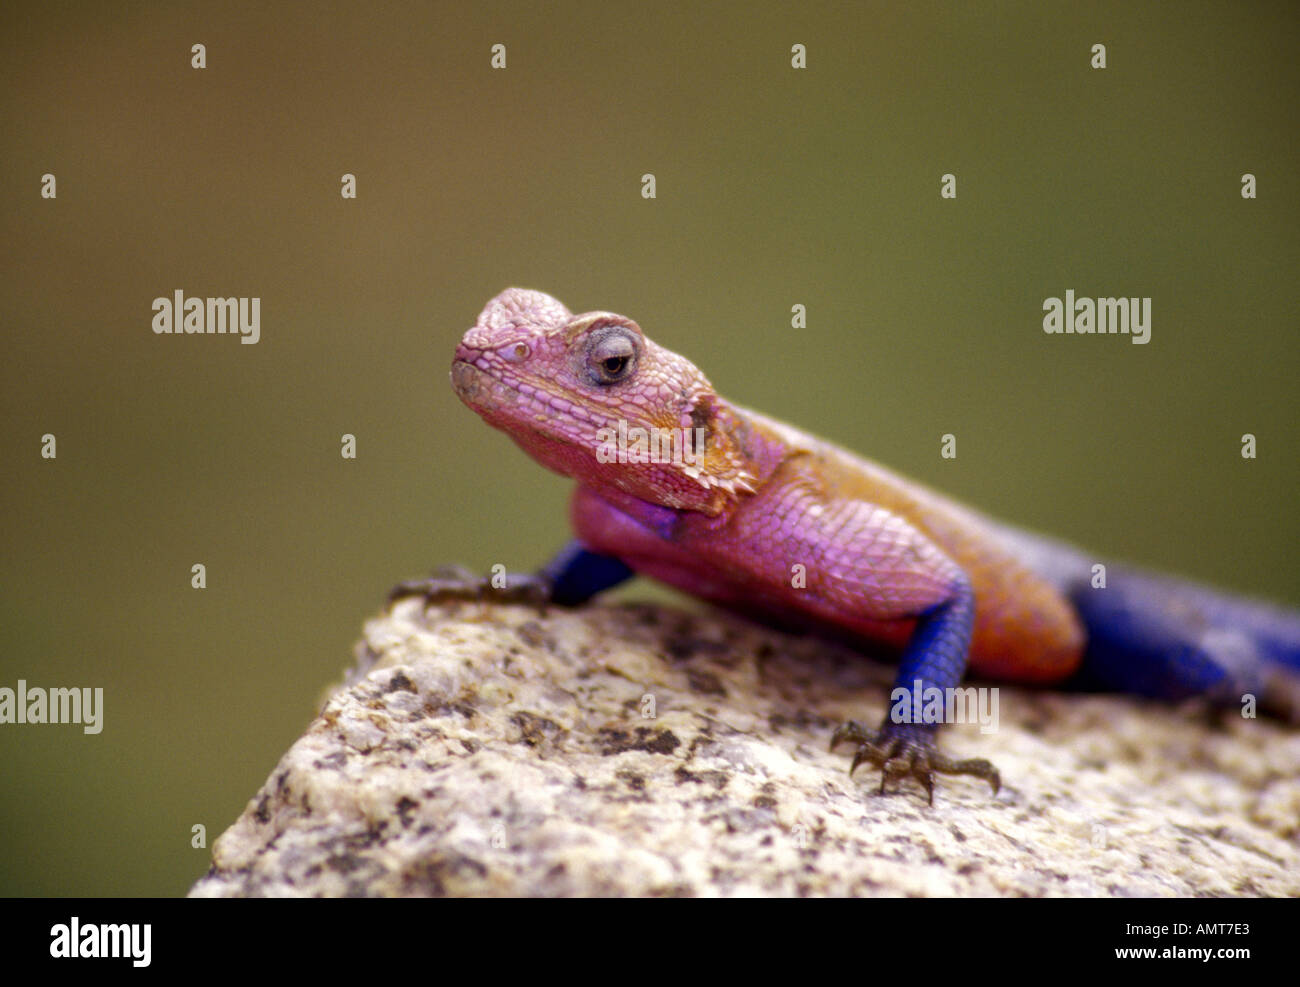 Male Agama lizard Stock Photo